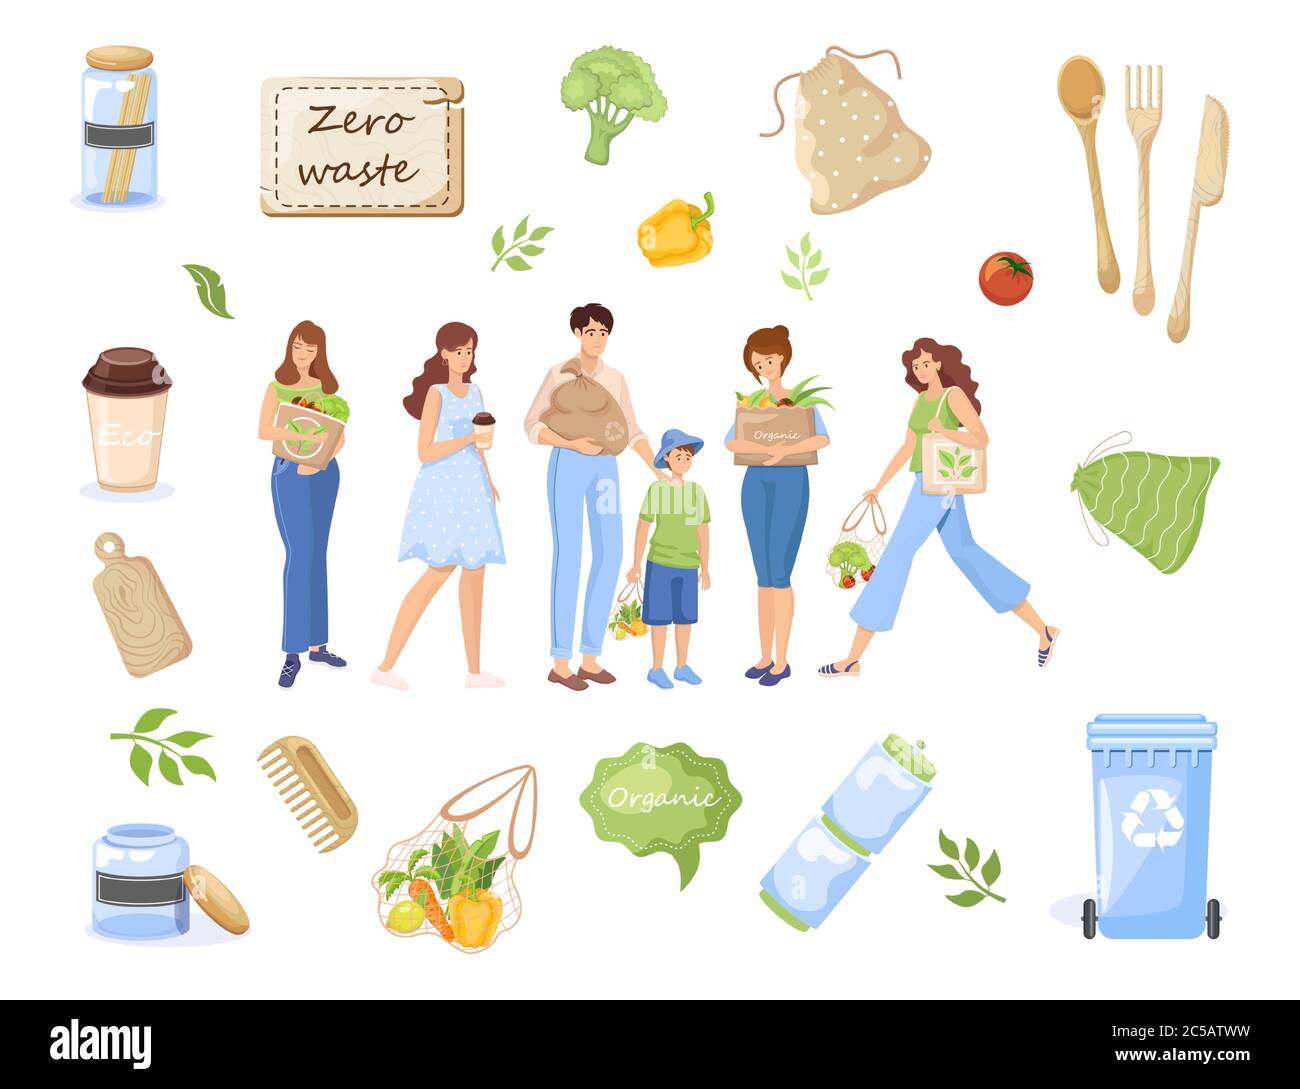 Objects and people. Здоровый образ жизни флэт иллюстрации мусор. Zero waste & Eco-friendly icon. Eco friendly Lifestyle.